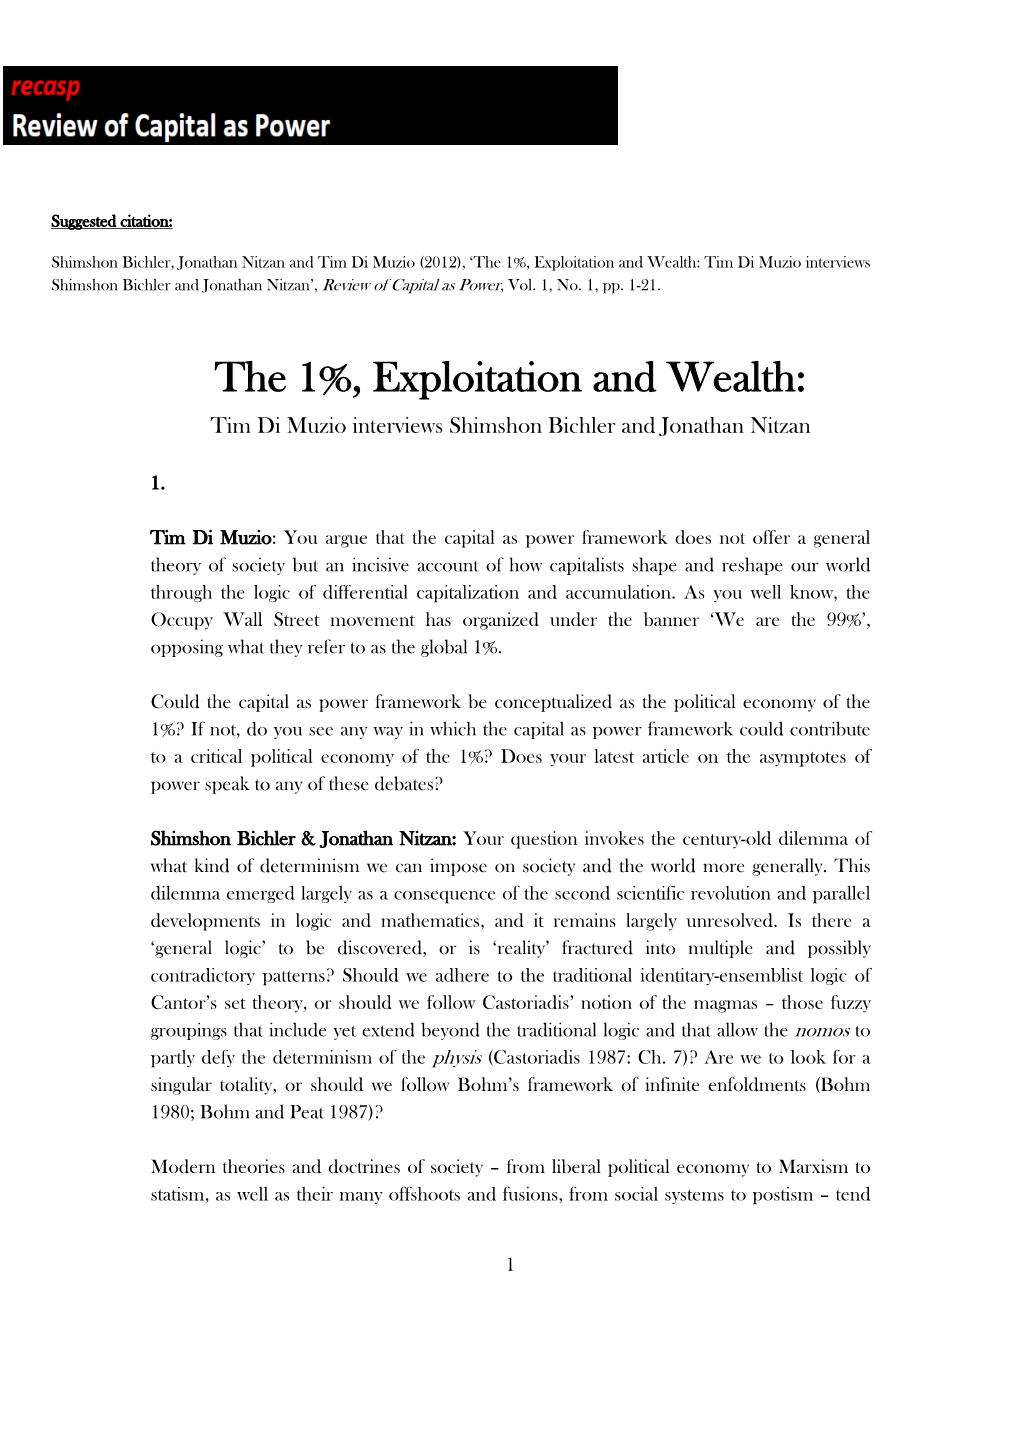 The 1%, Exploitation and Wealth: Tim Di Muzio Interviews Shimshon Bichler and Jonathan Nitzan’, Review of Capital As Power, Vol